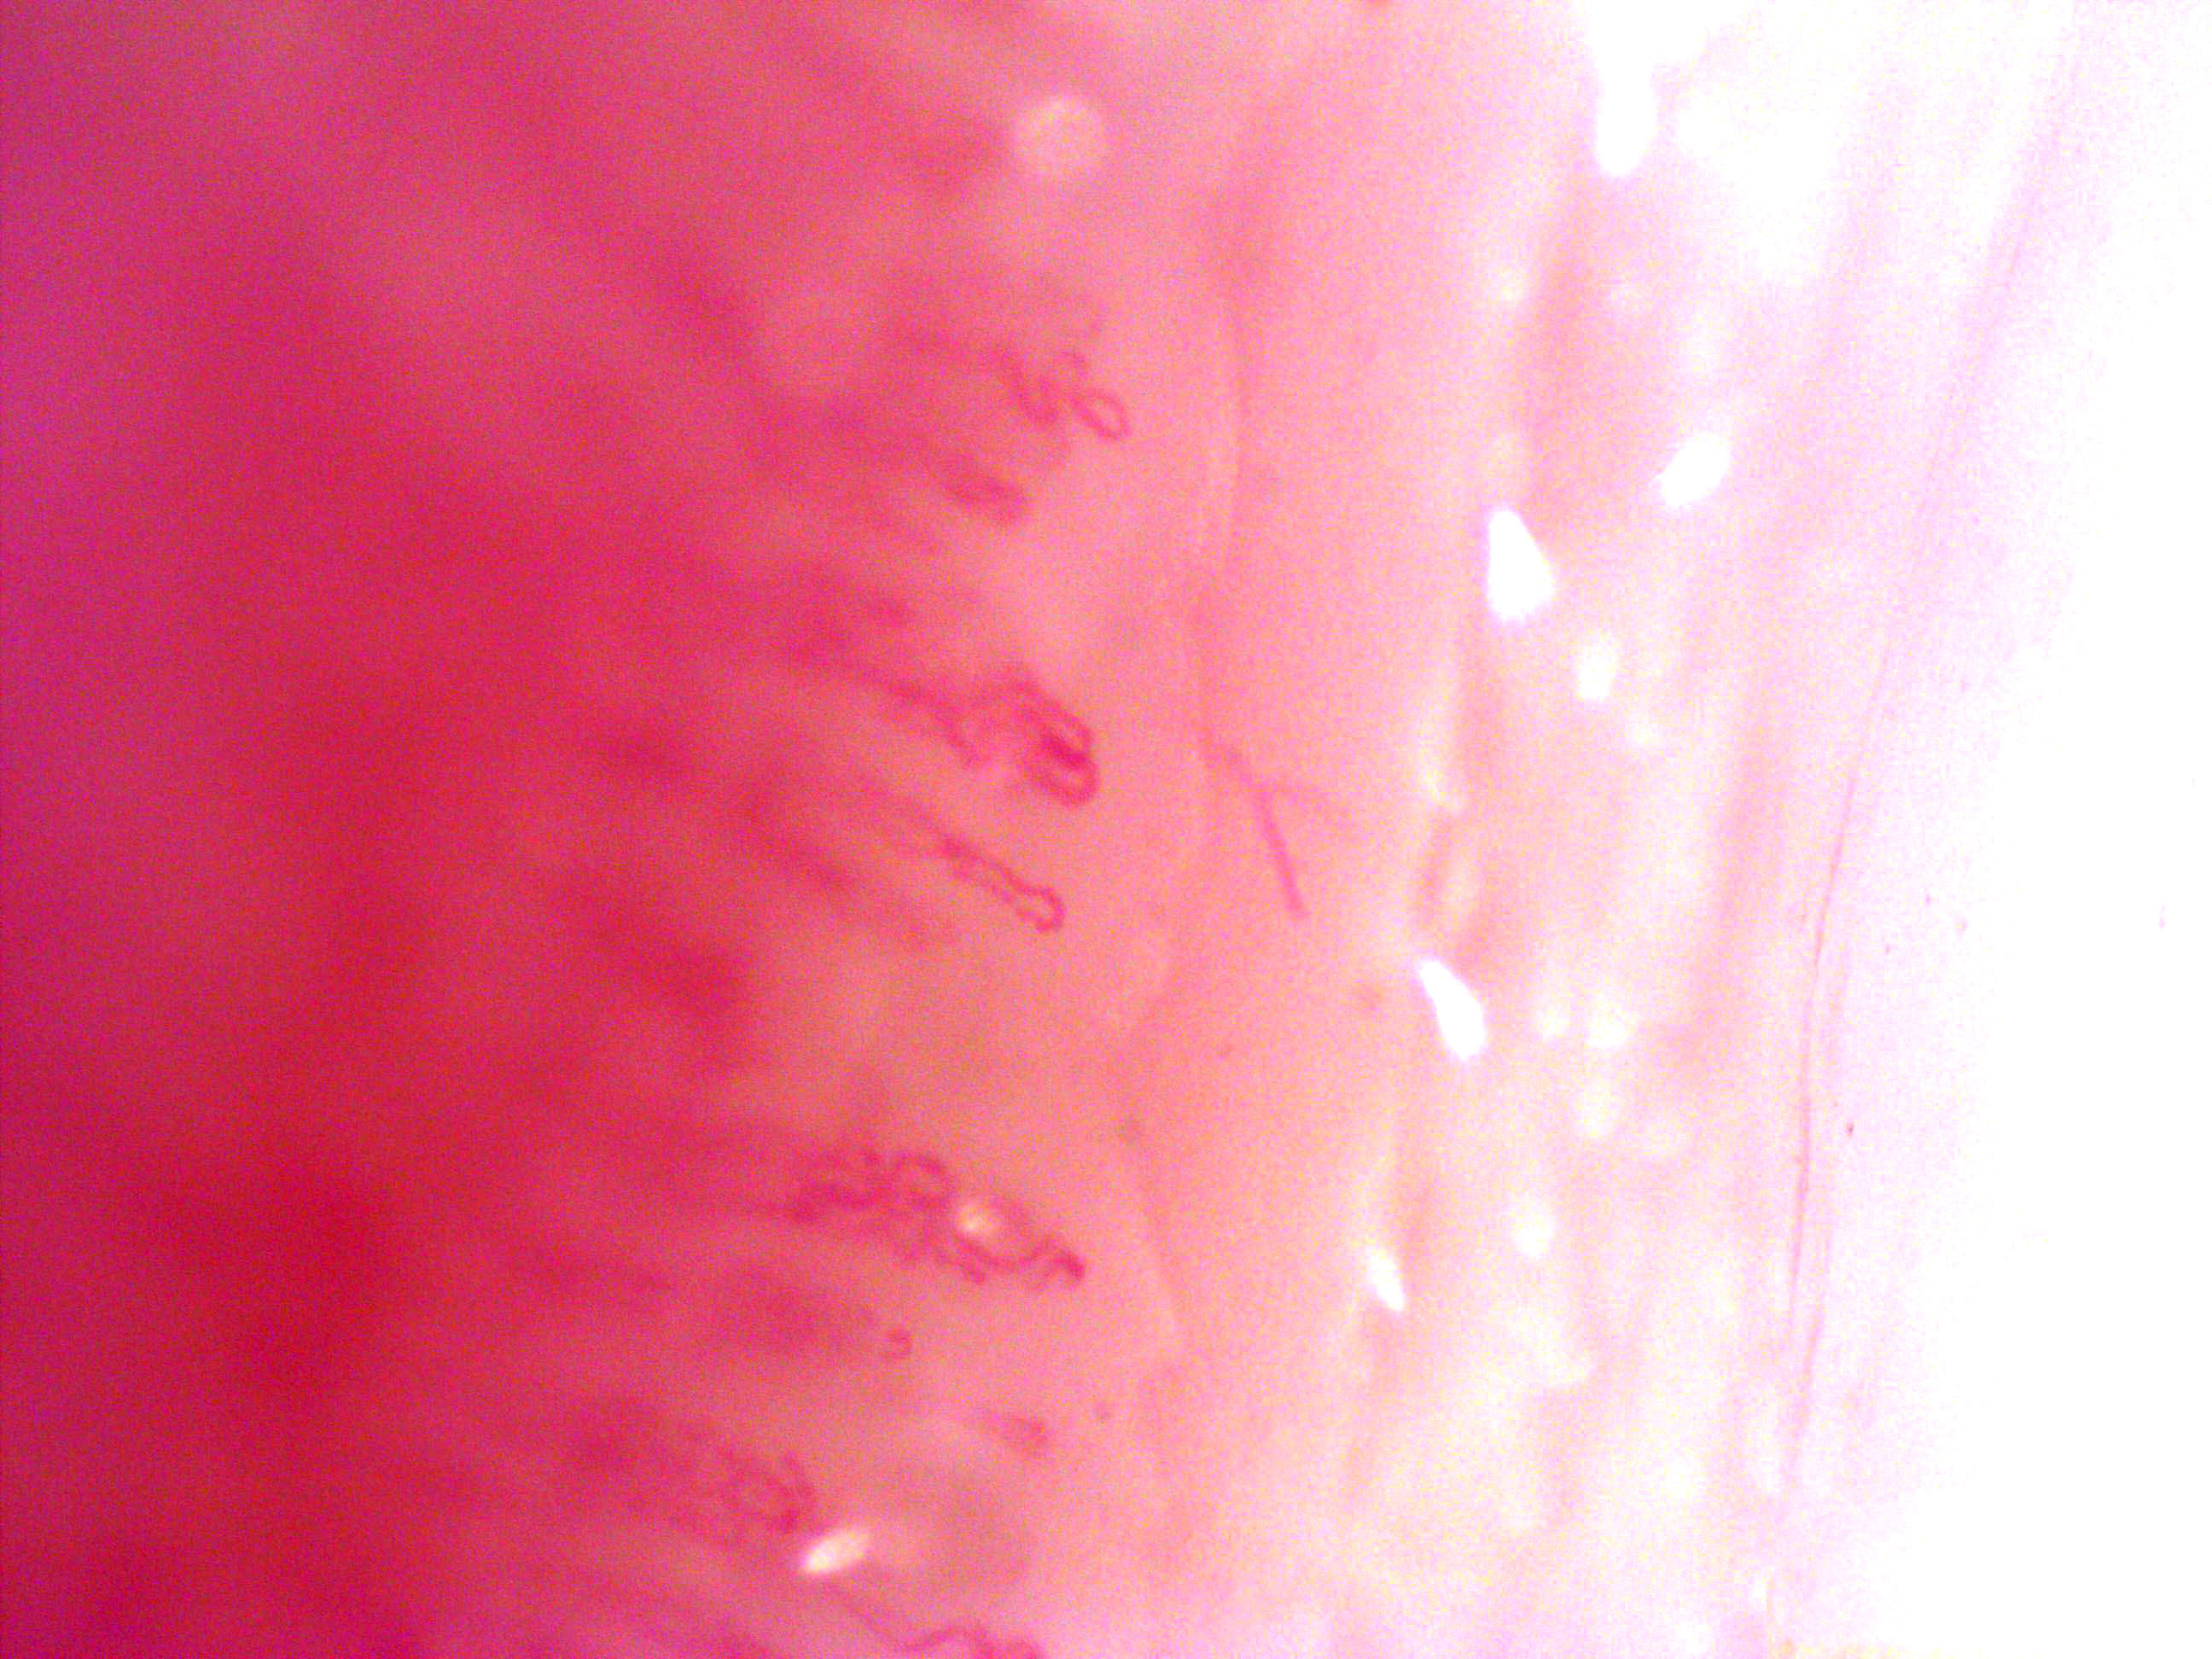 Nailfold capillaries as seen thru ZEISS Skin Microscope